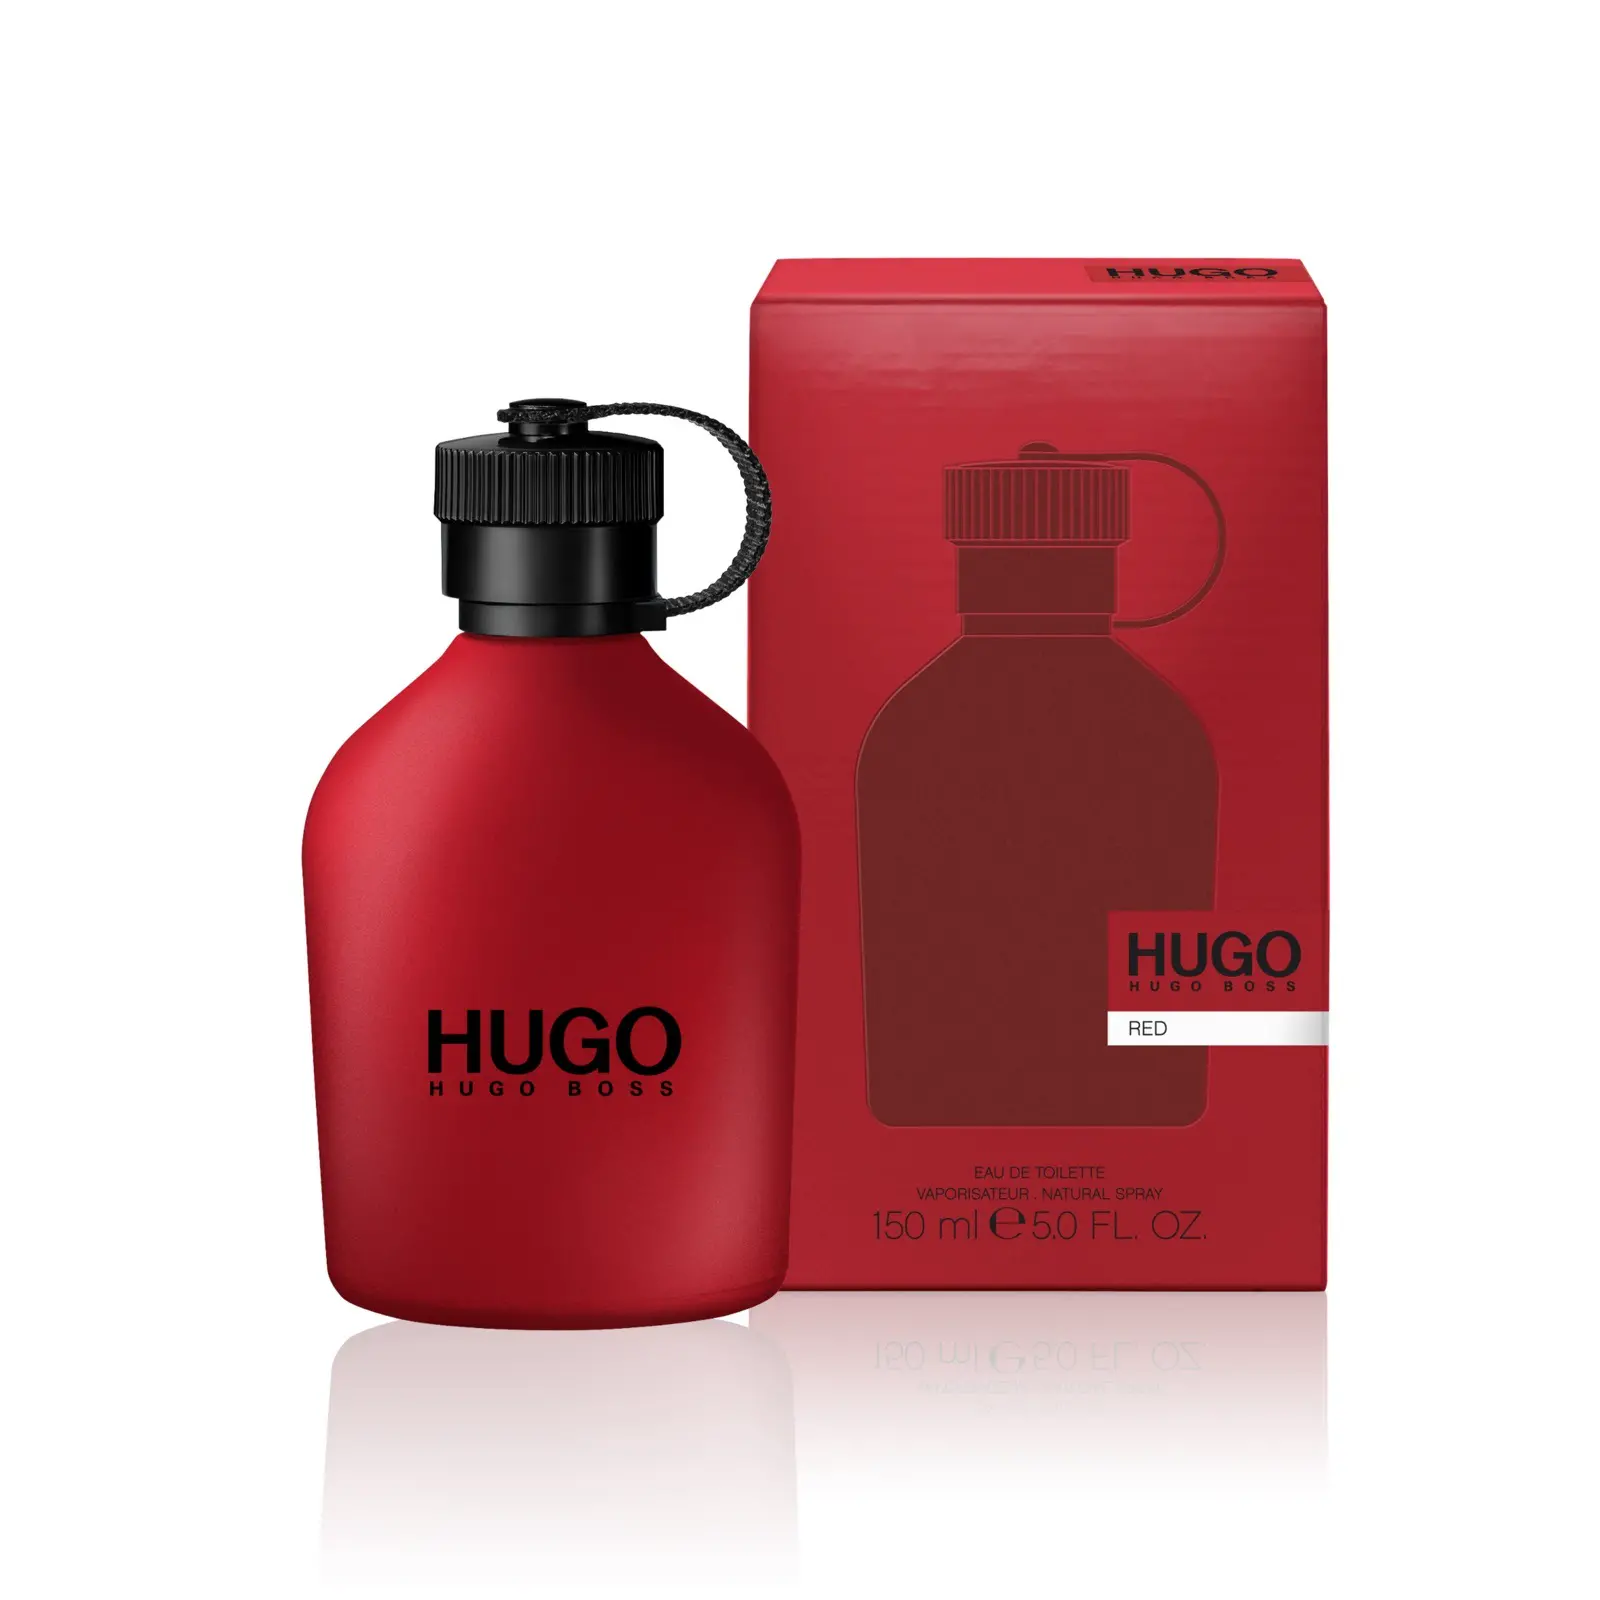 Ml hugo. Туалетная вода Hugo Boss Hugo man, 150 мл. 117. Hugo Boss Hugo Red 75мл. Hugo Boss туалетная вода 100 мл. Hugo Boss Red EDT Хьюго босс ред туалетная вода 150 ml.